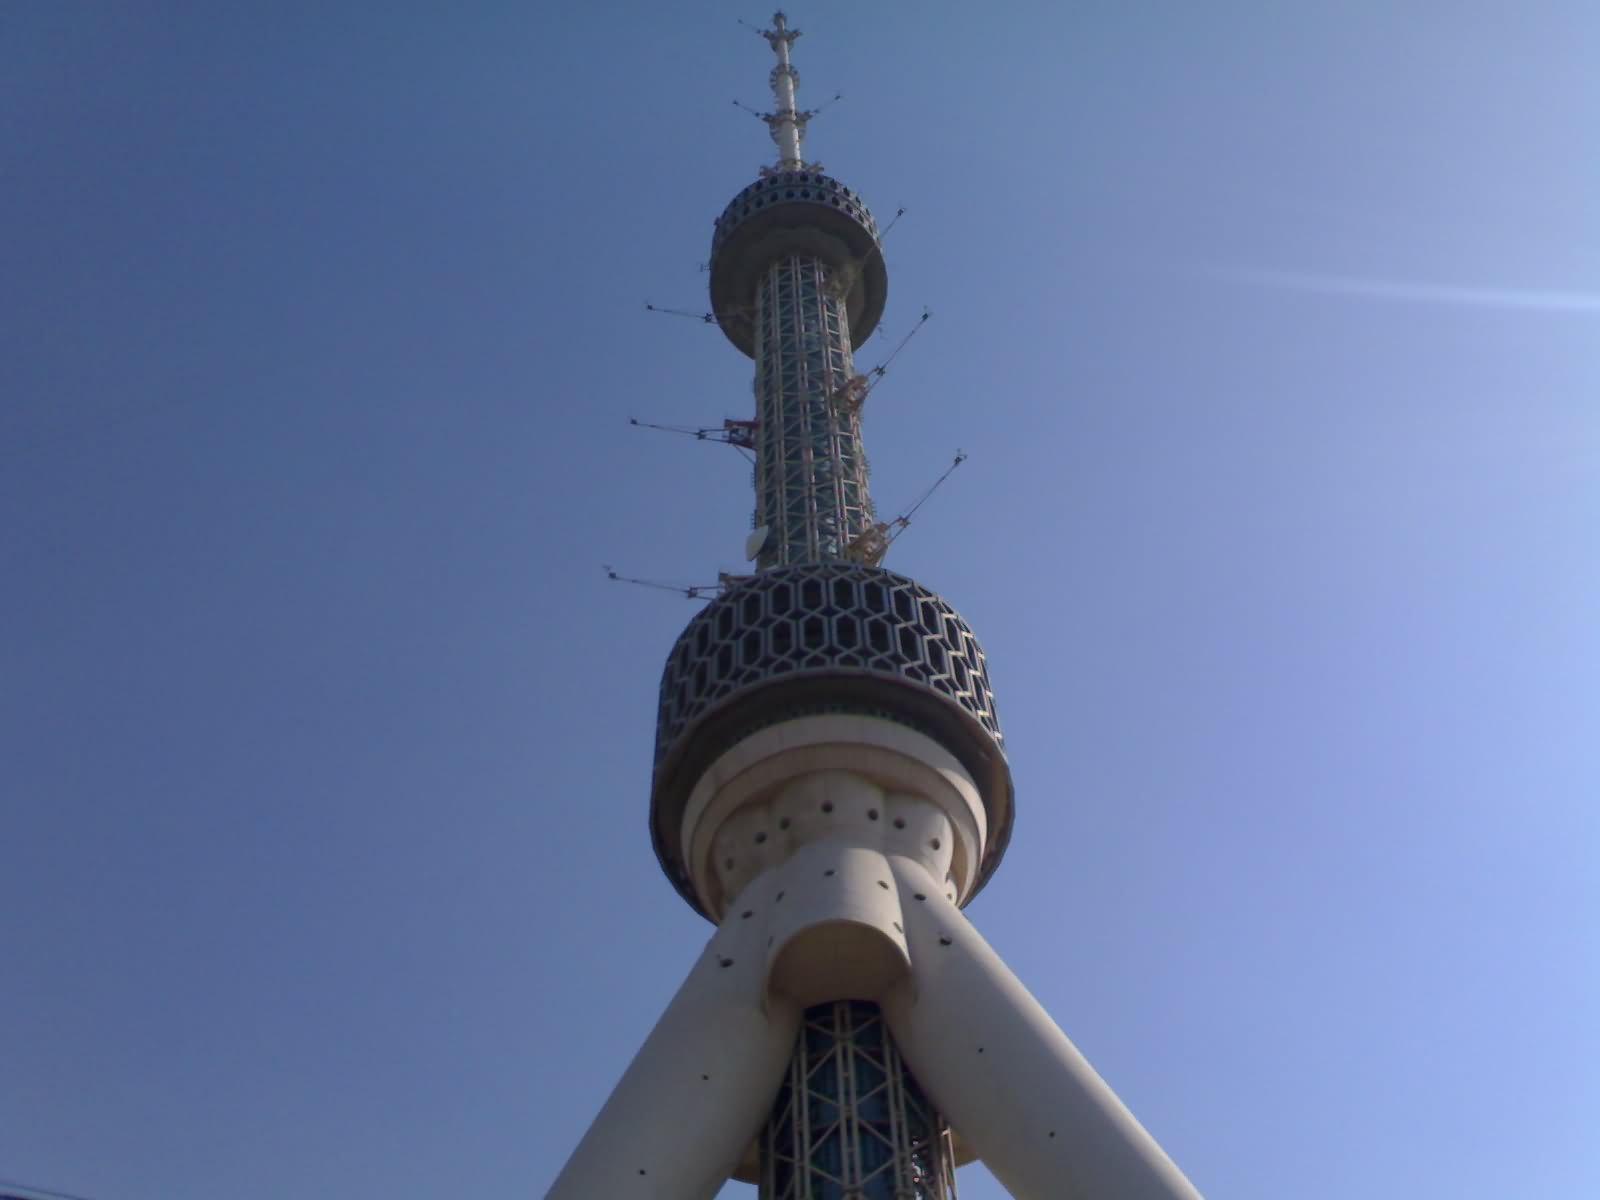 The Tashkent Tower View From Below